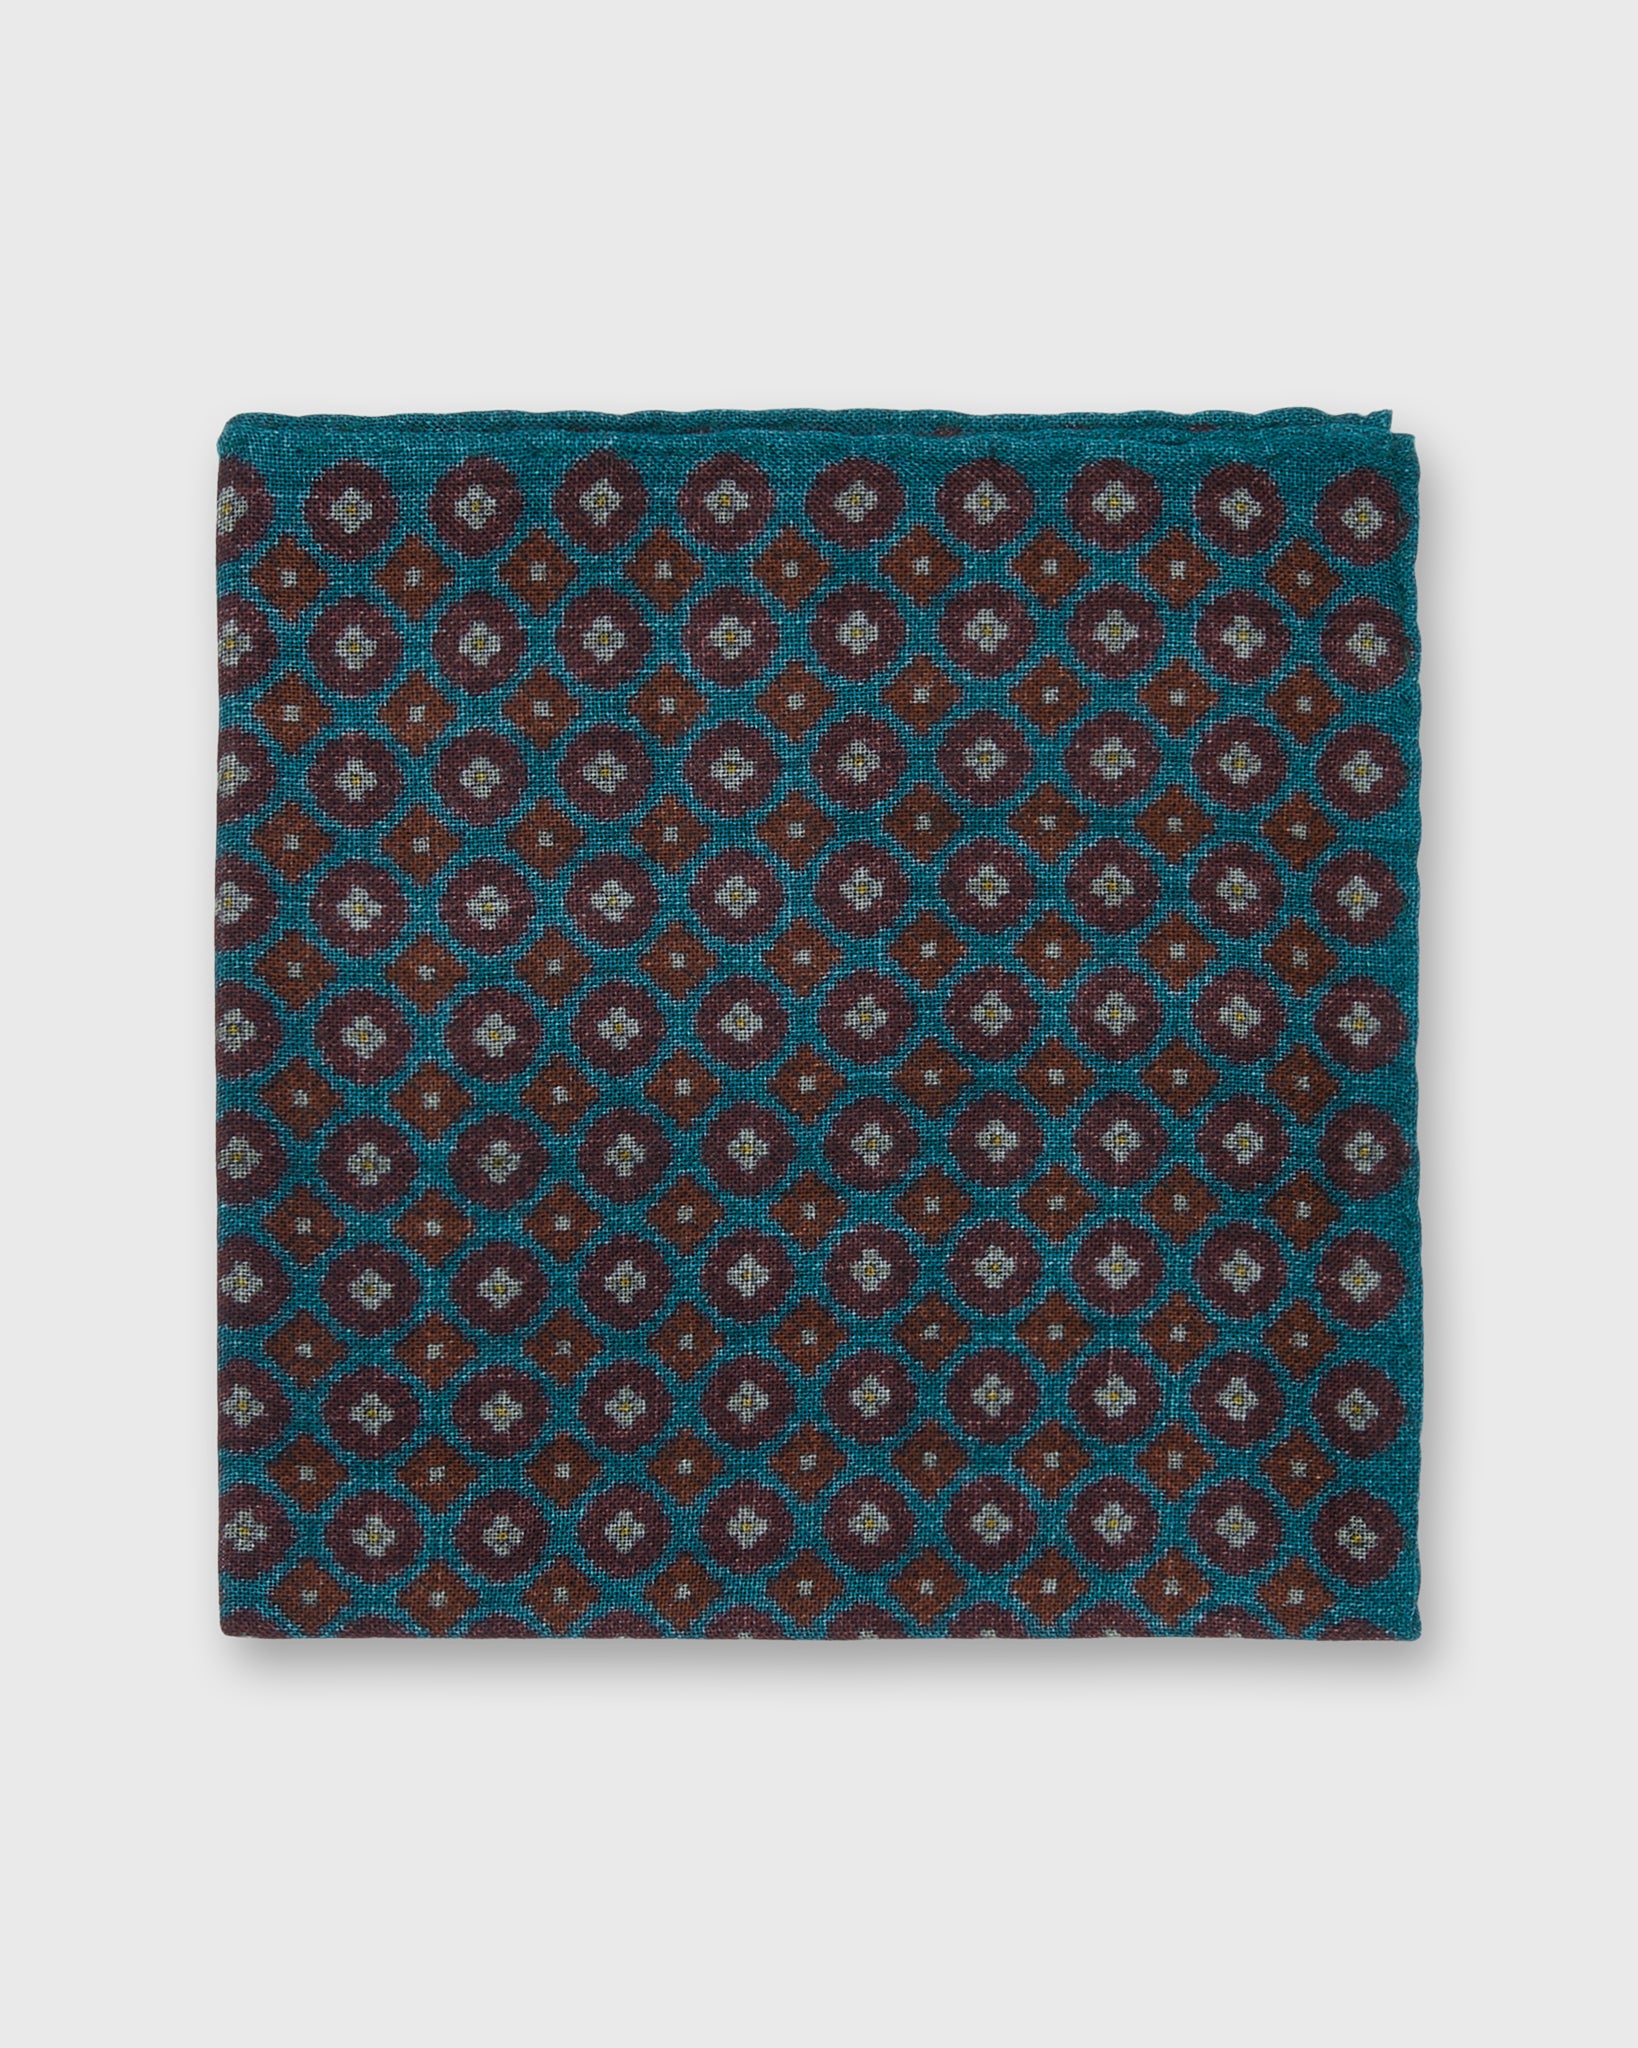 Wool/Silk Pocket Square in Lovat/Brown Medallion